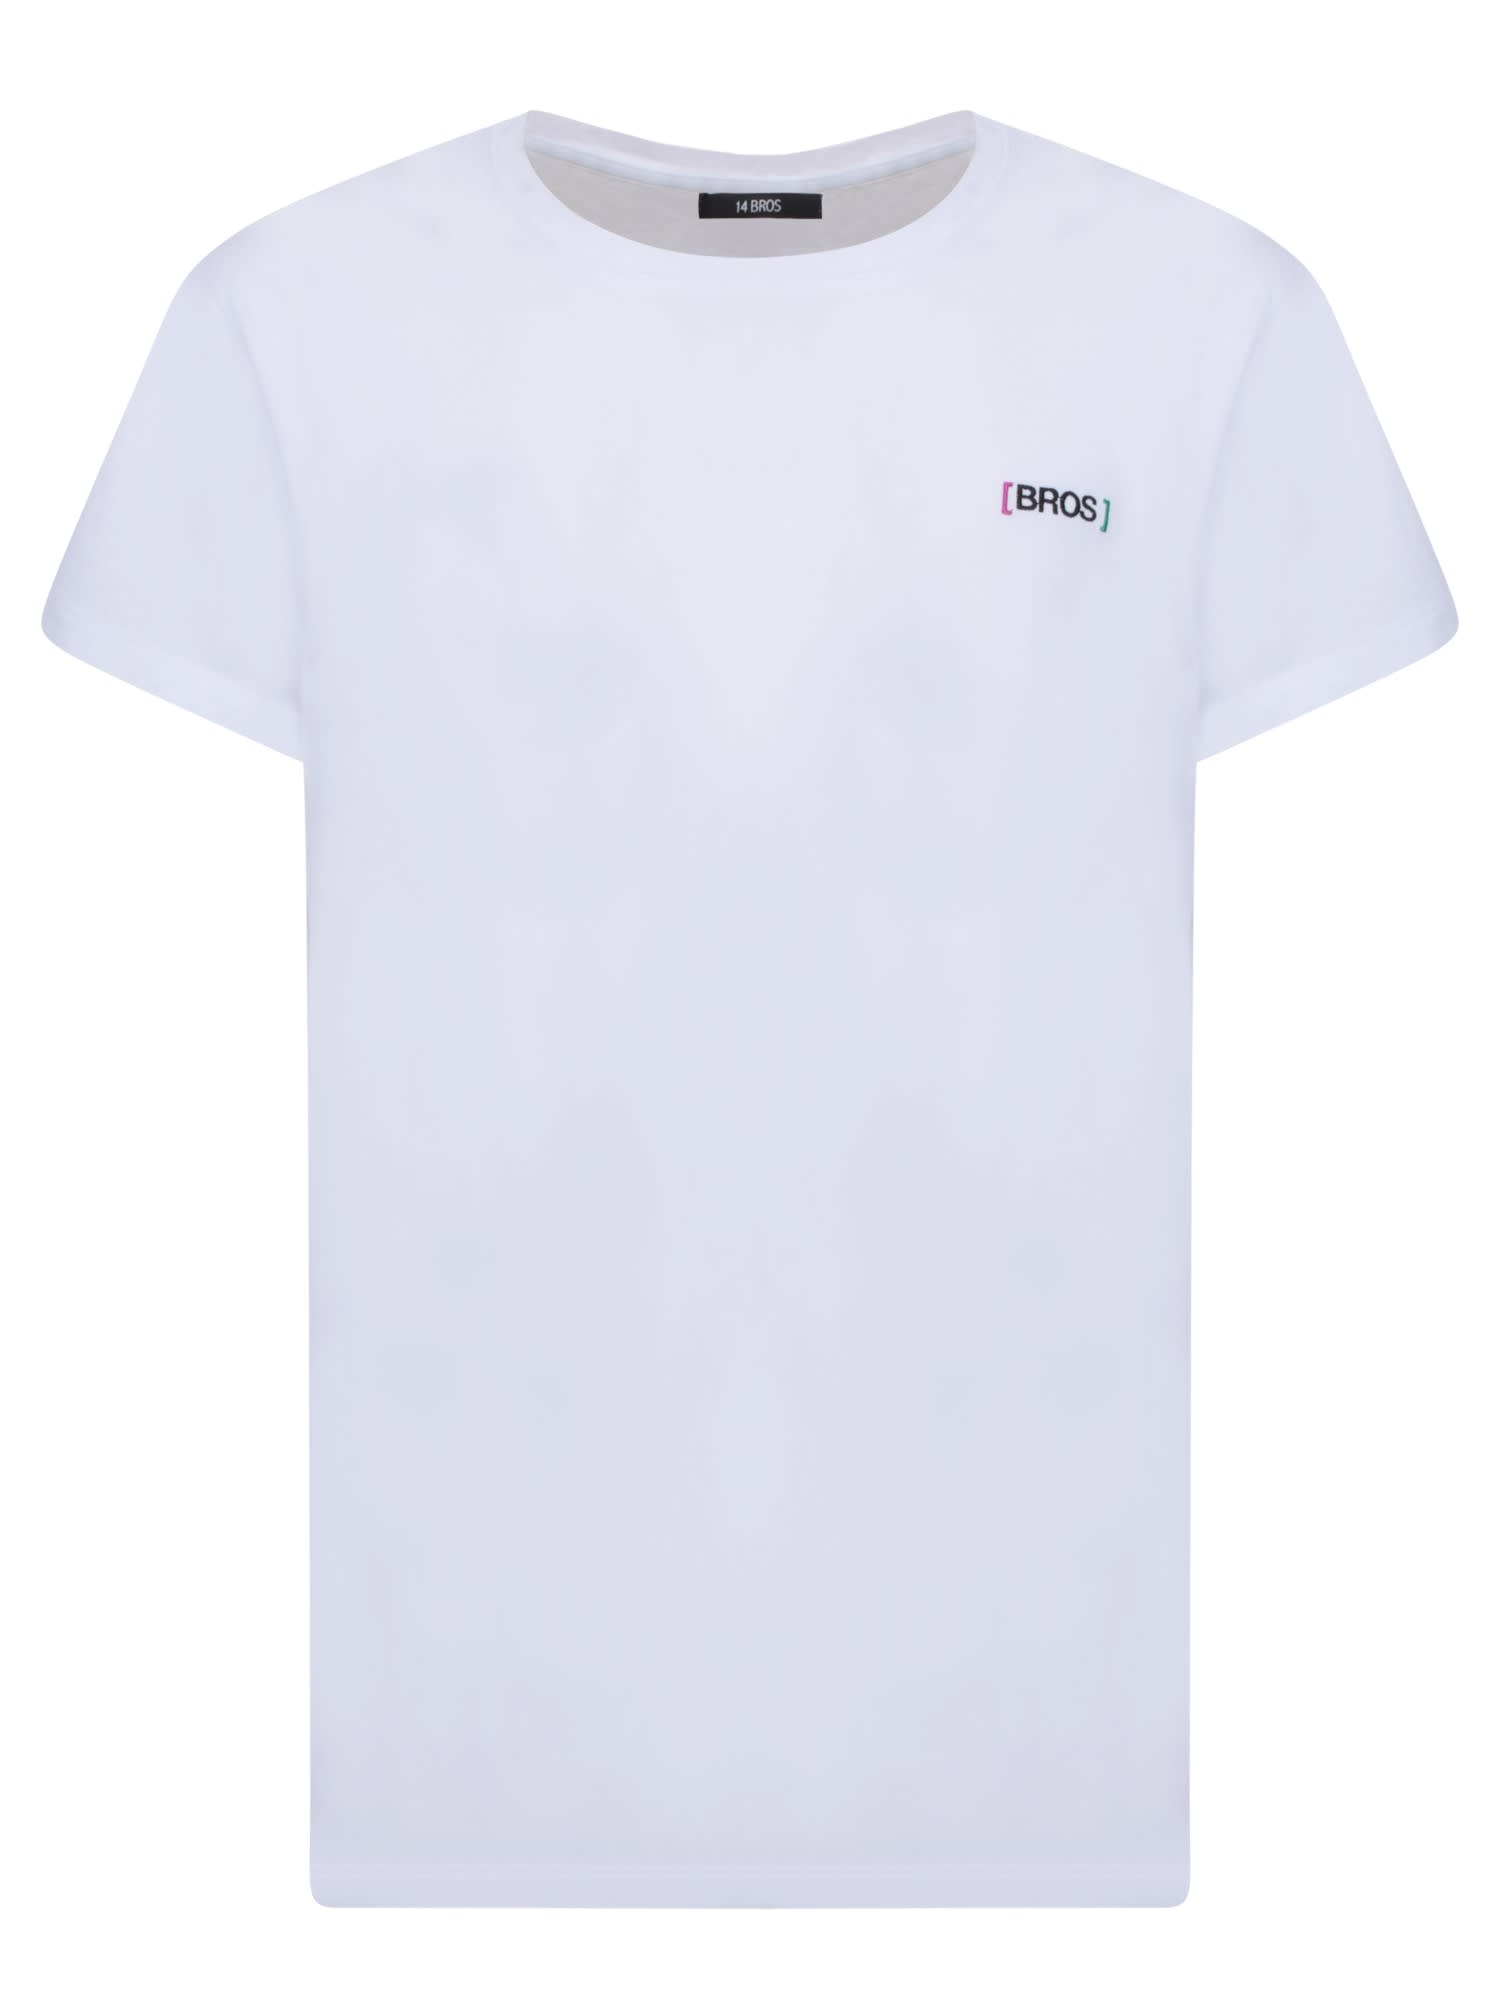 Shop 14 Bros Chest Logo White T-shirt